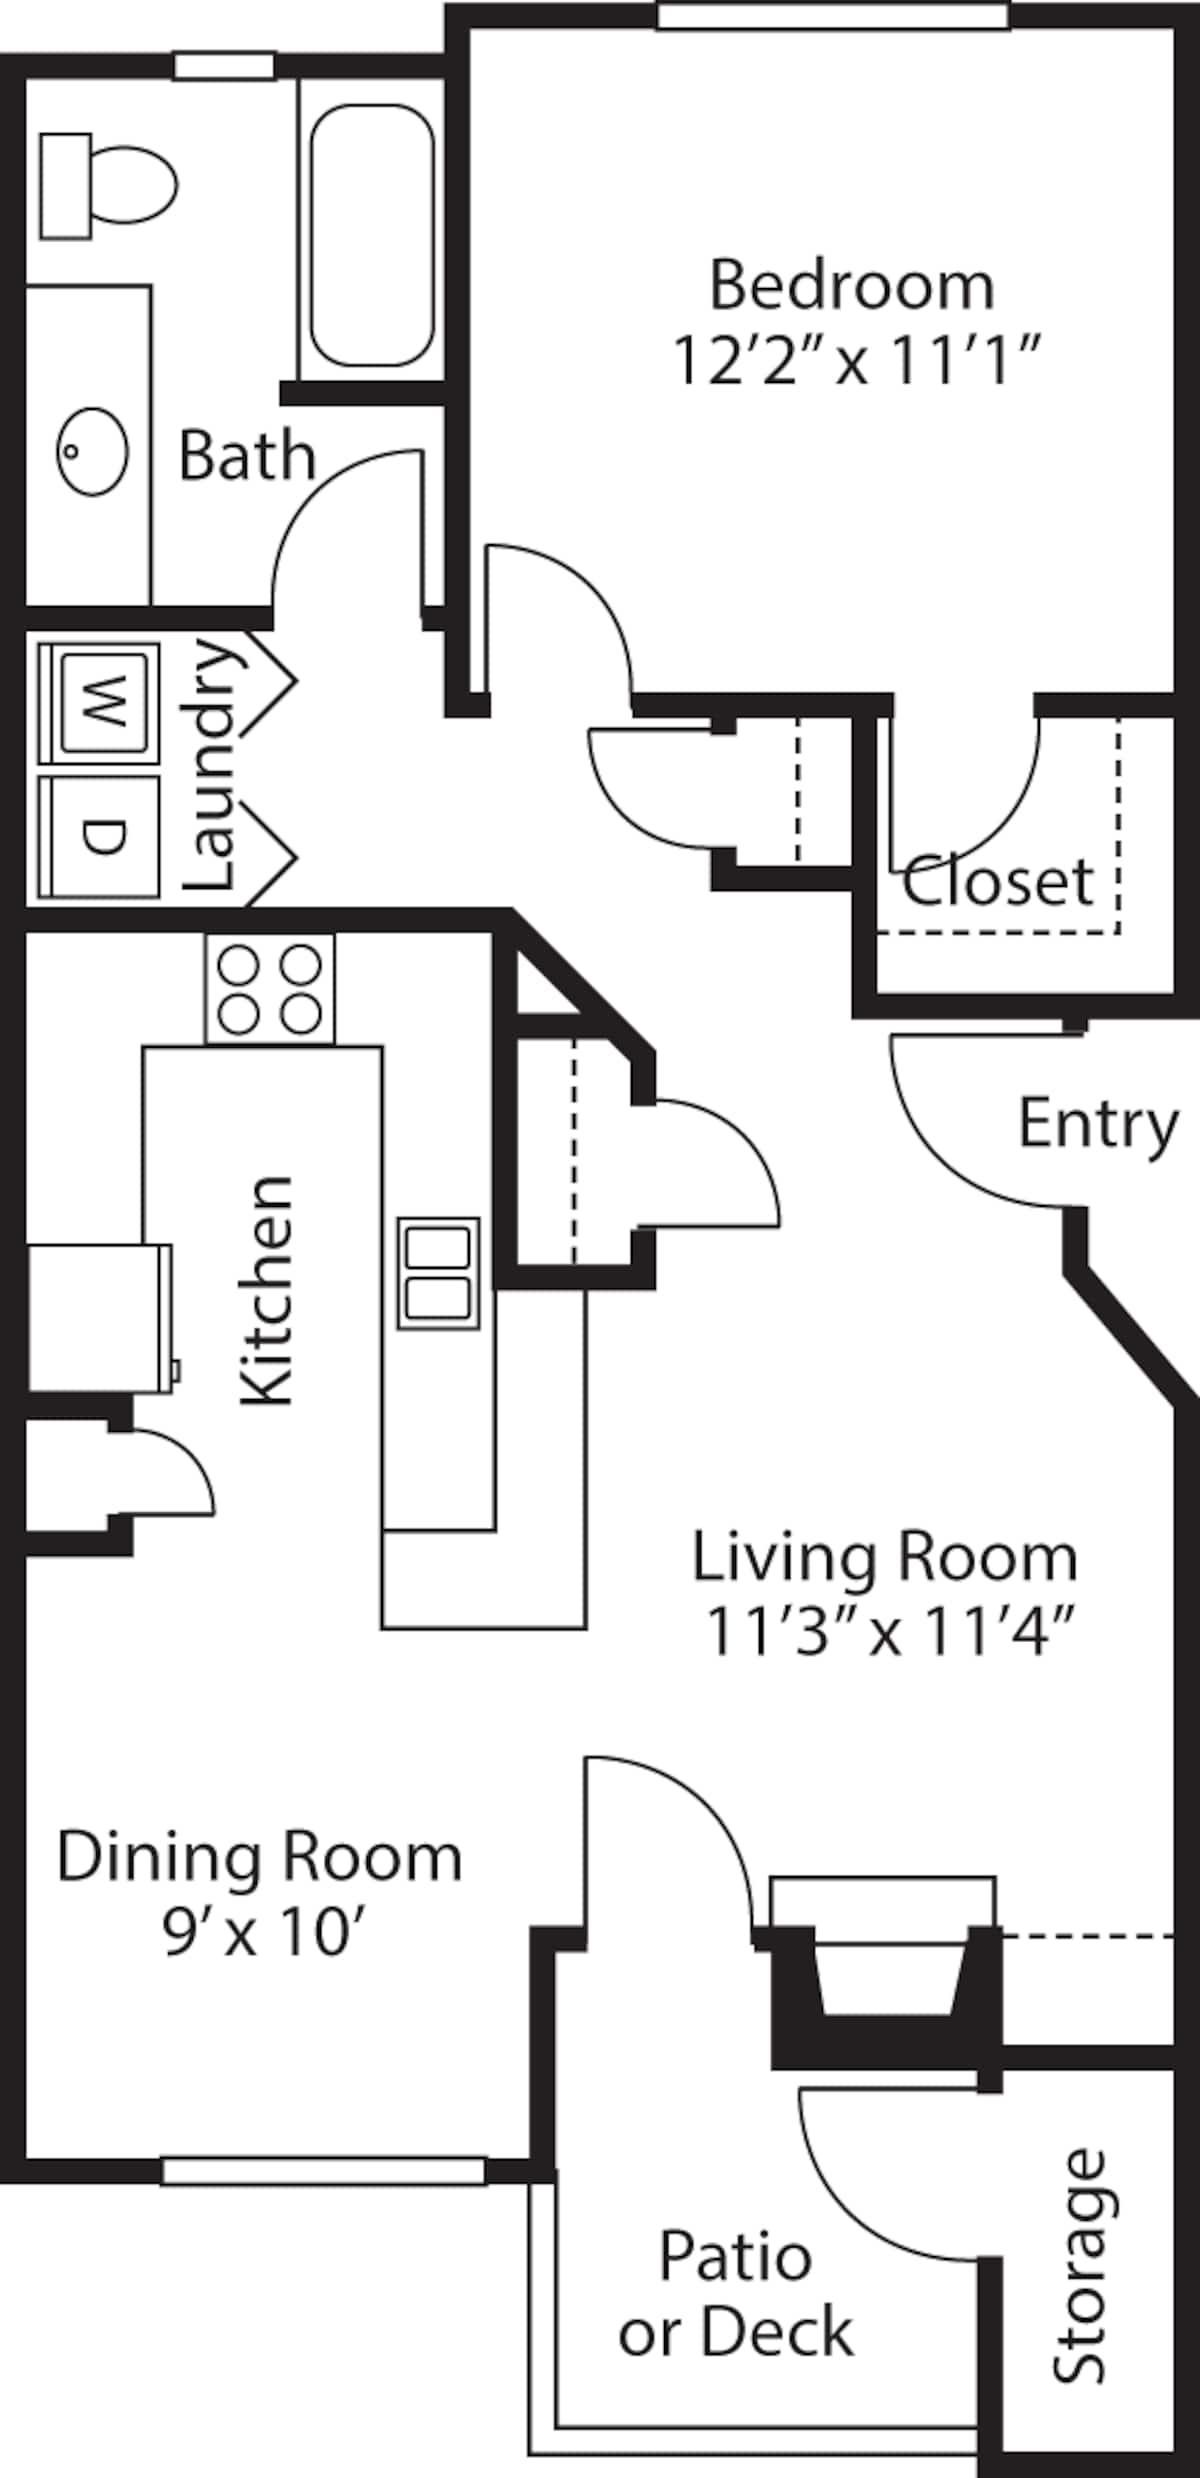 Floorplan diagram for One Bedroom  One Bath, showing 1 bedroom